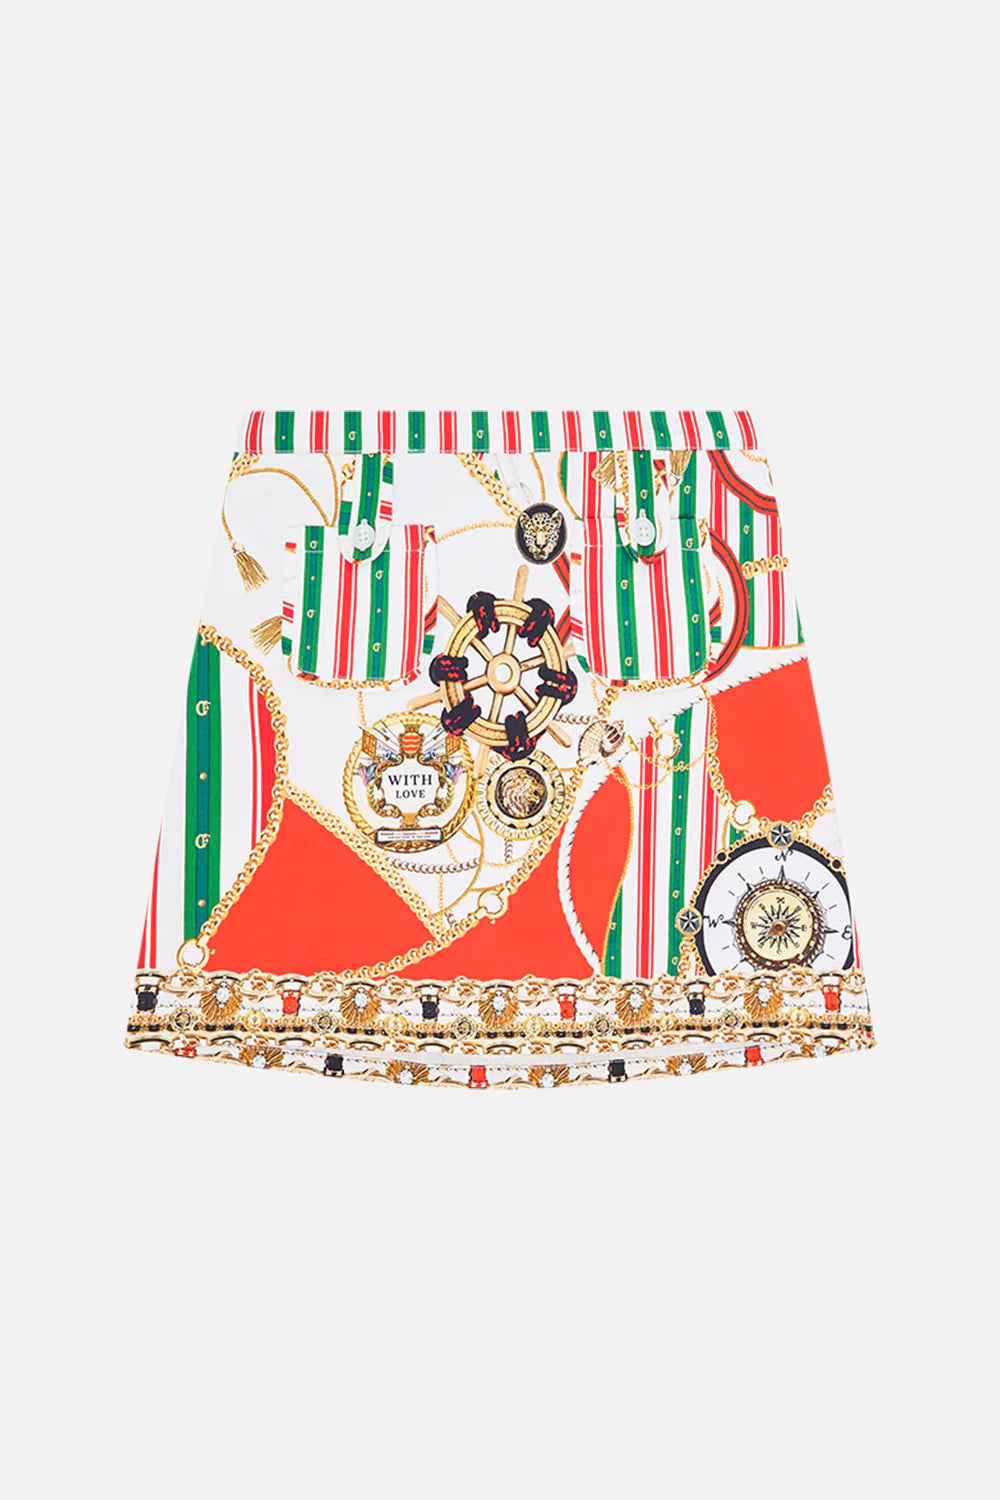 Saluti Summertime Kids Mini Skirt With Pockets 12-14 GIRLS CLOTHING CAMILLA 